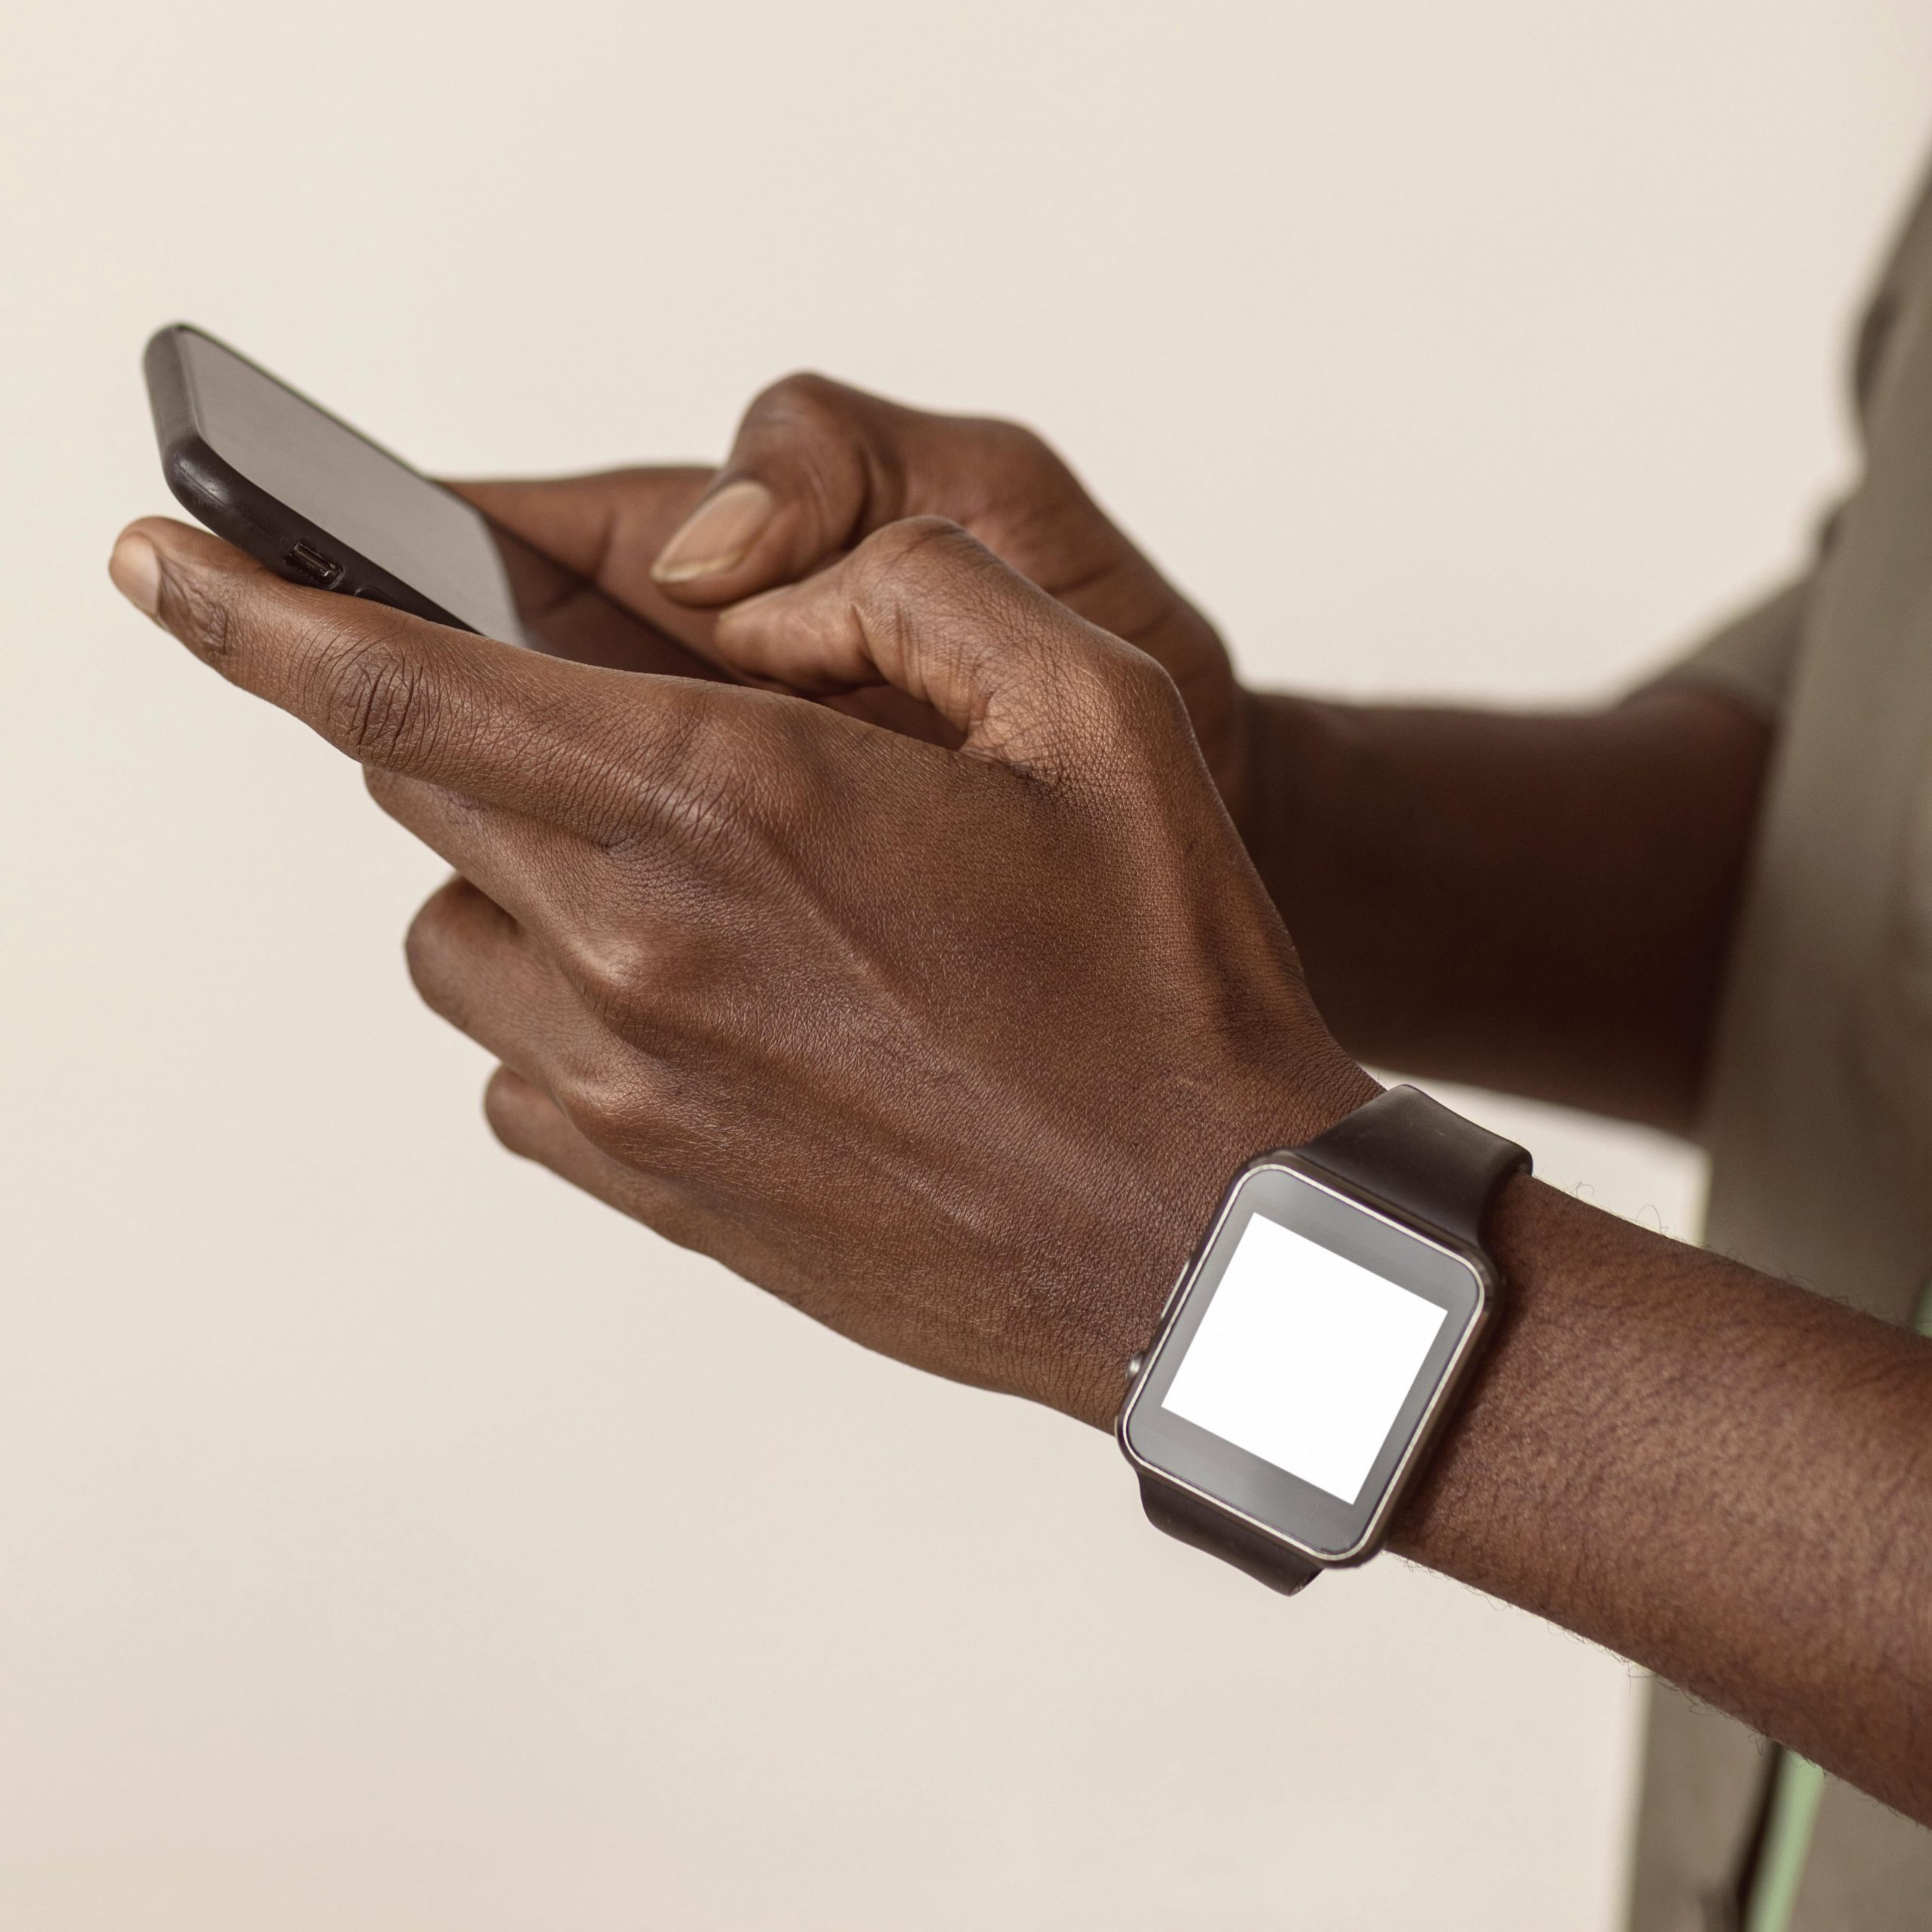 Man's hands close up holding smart phone, wearing smart watch